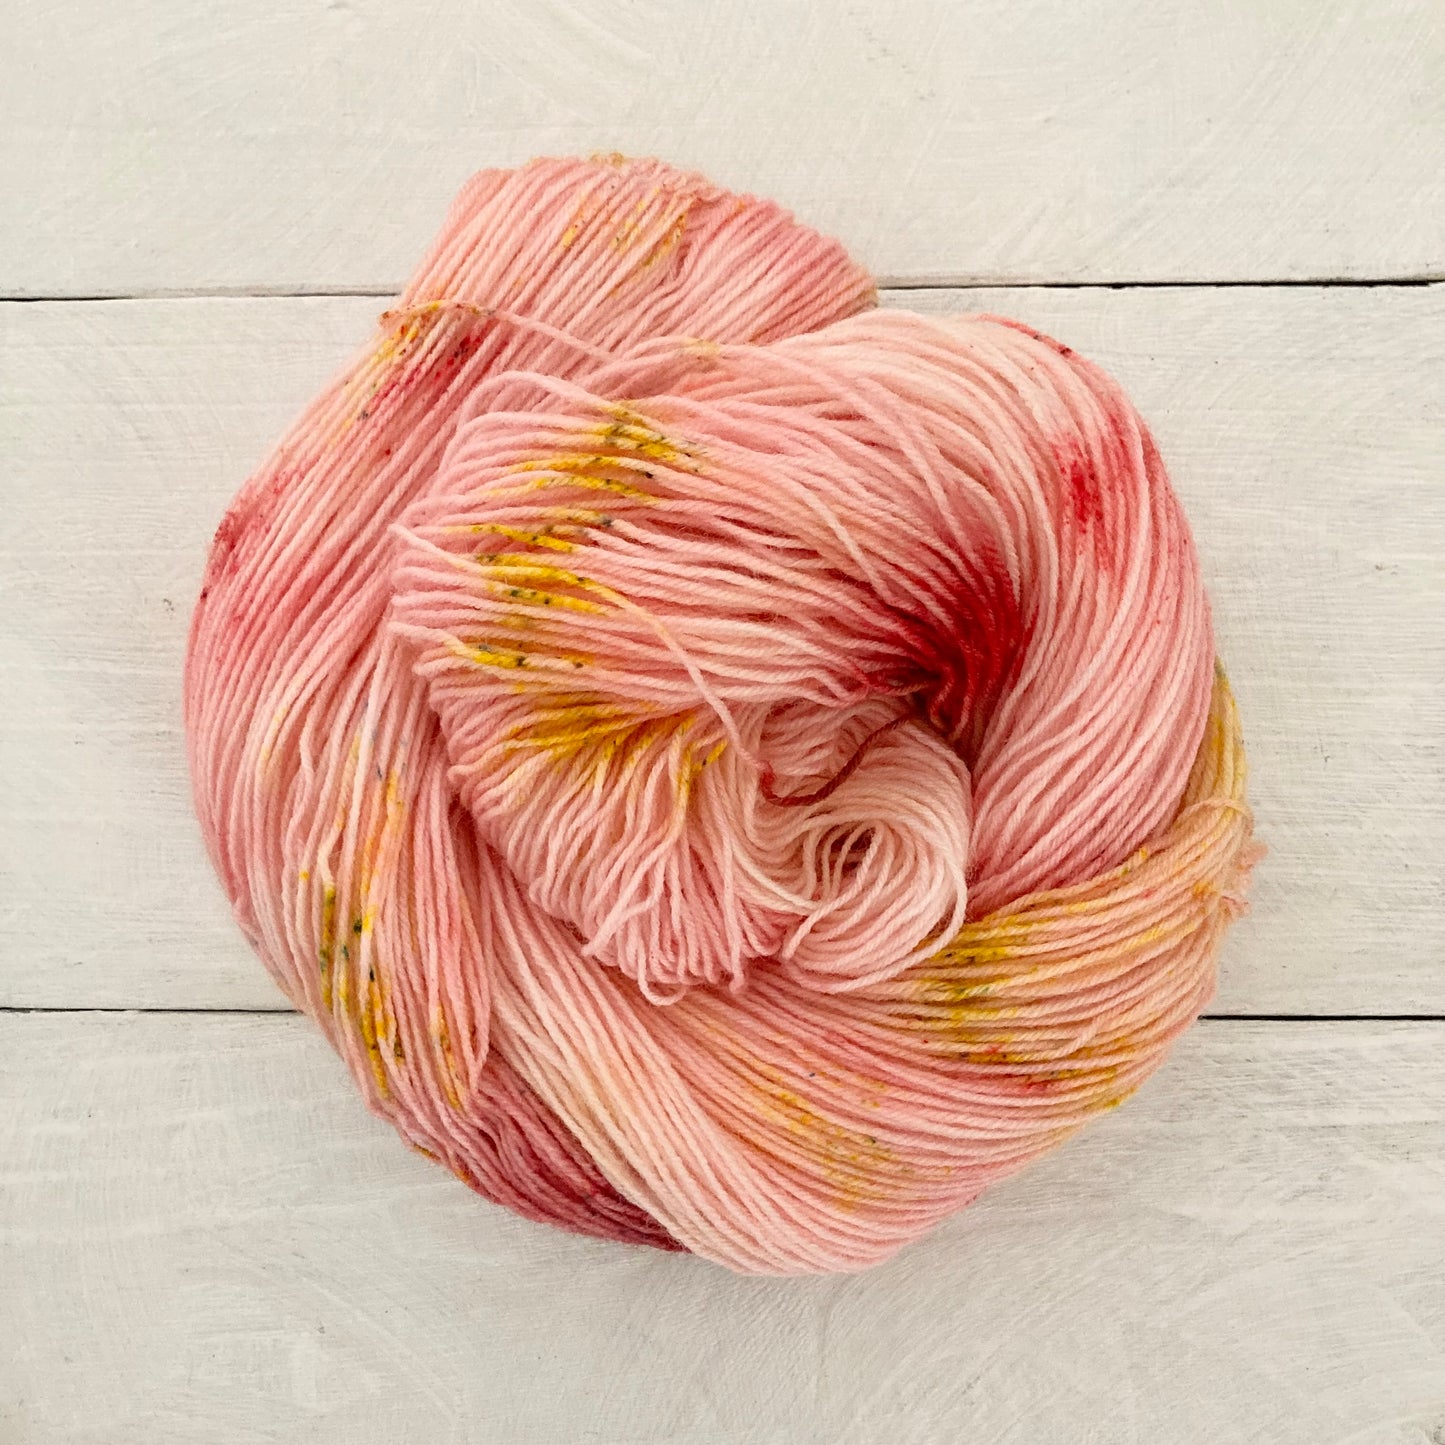 Hand-dyed yarn No.197 sock yarn "Rose Adagio"